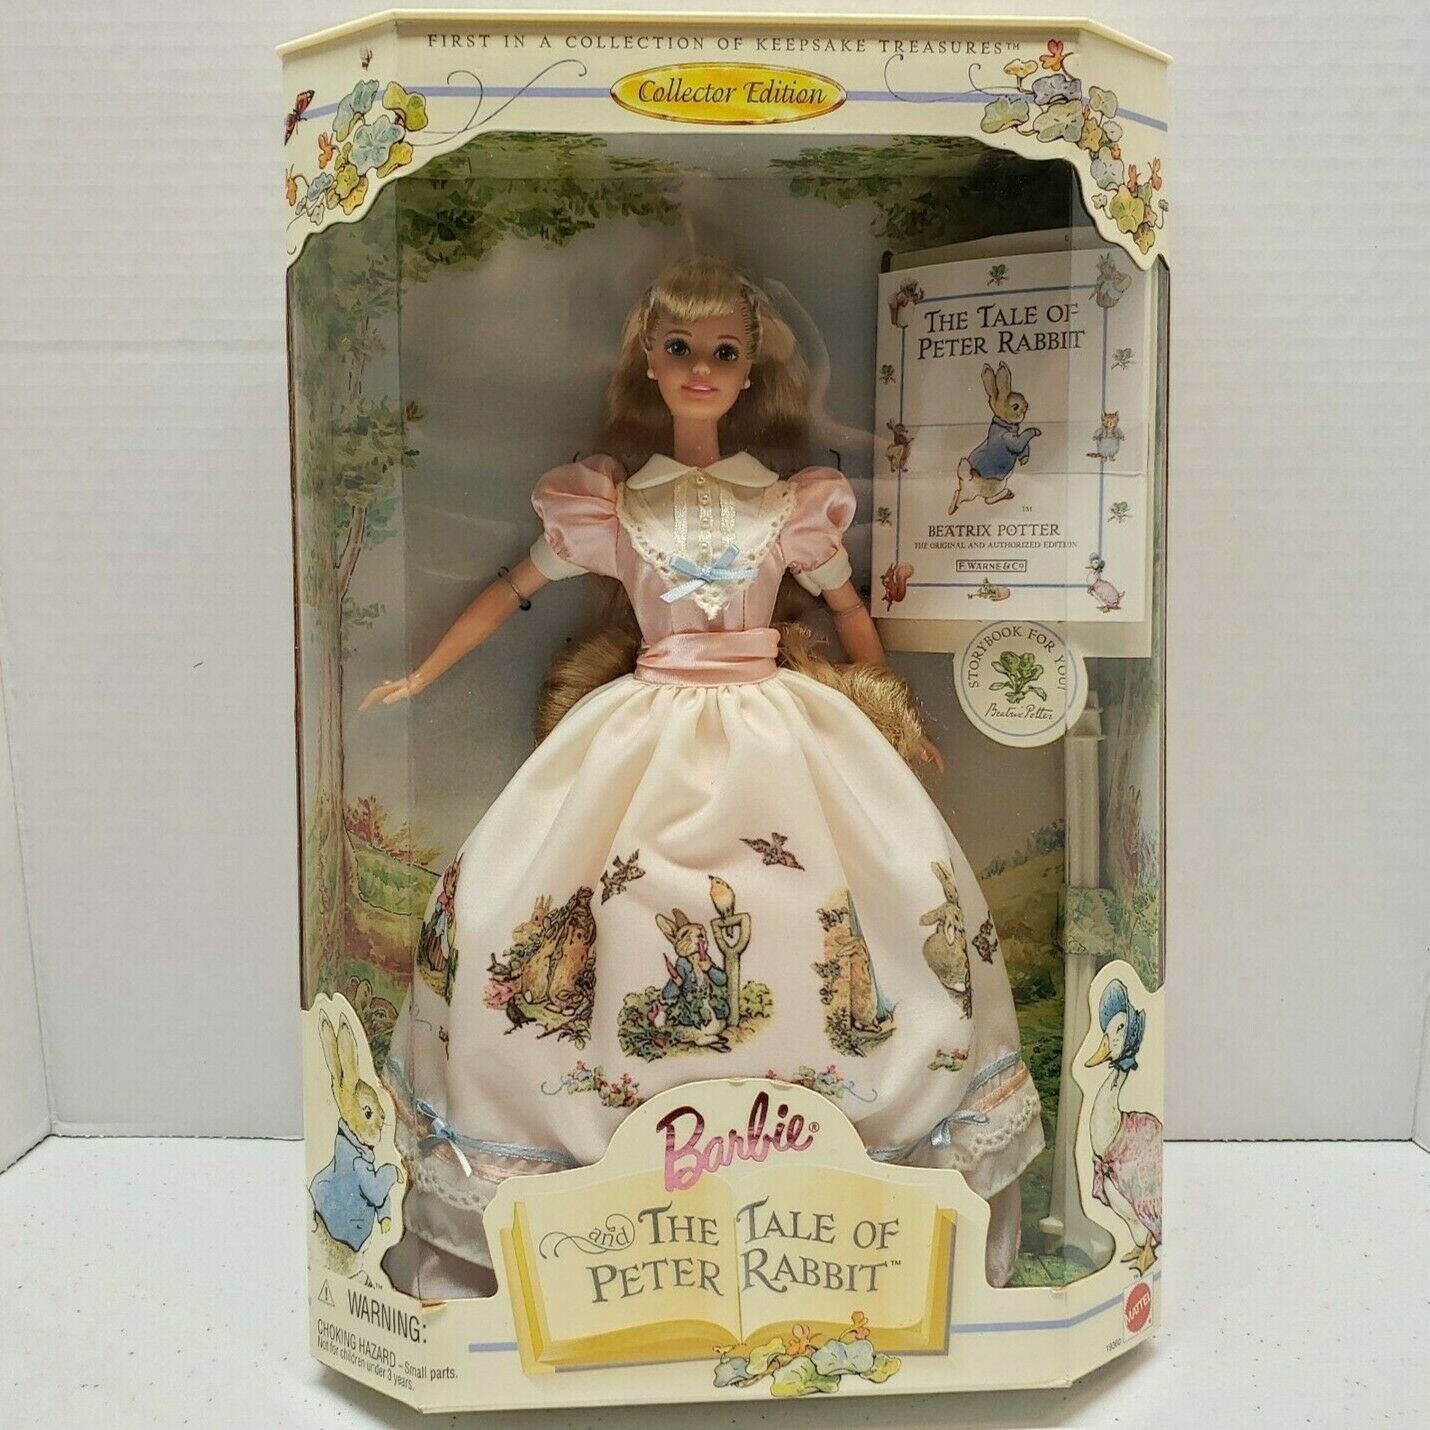 Mattel Barbie Tale Of Peter Rabbit Keepsake Treasures Collector Edition 1997 New